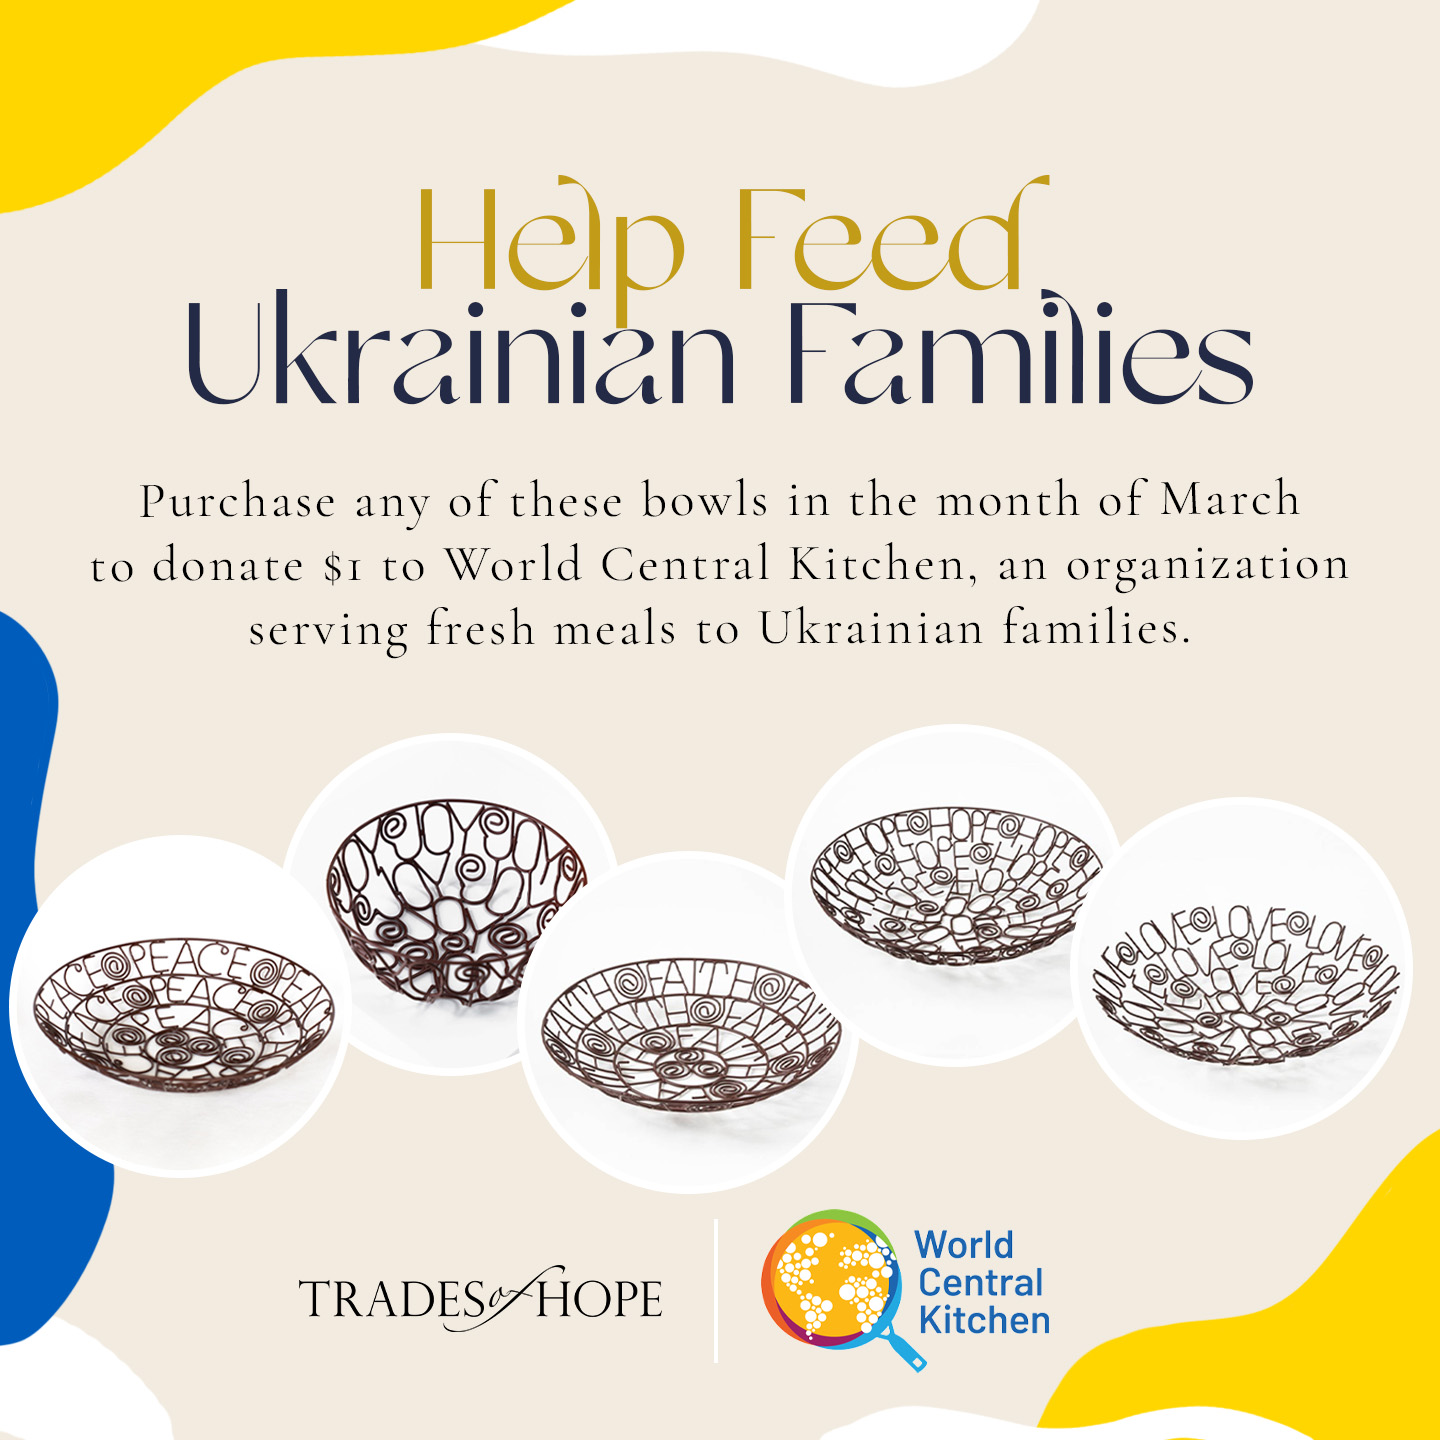 Let’s keep feeding Ukrainian families!